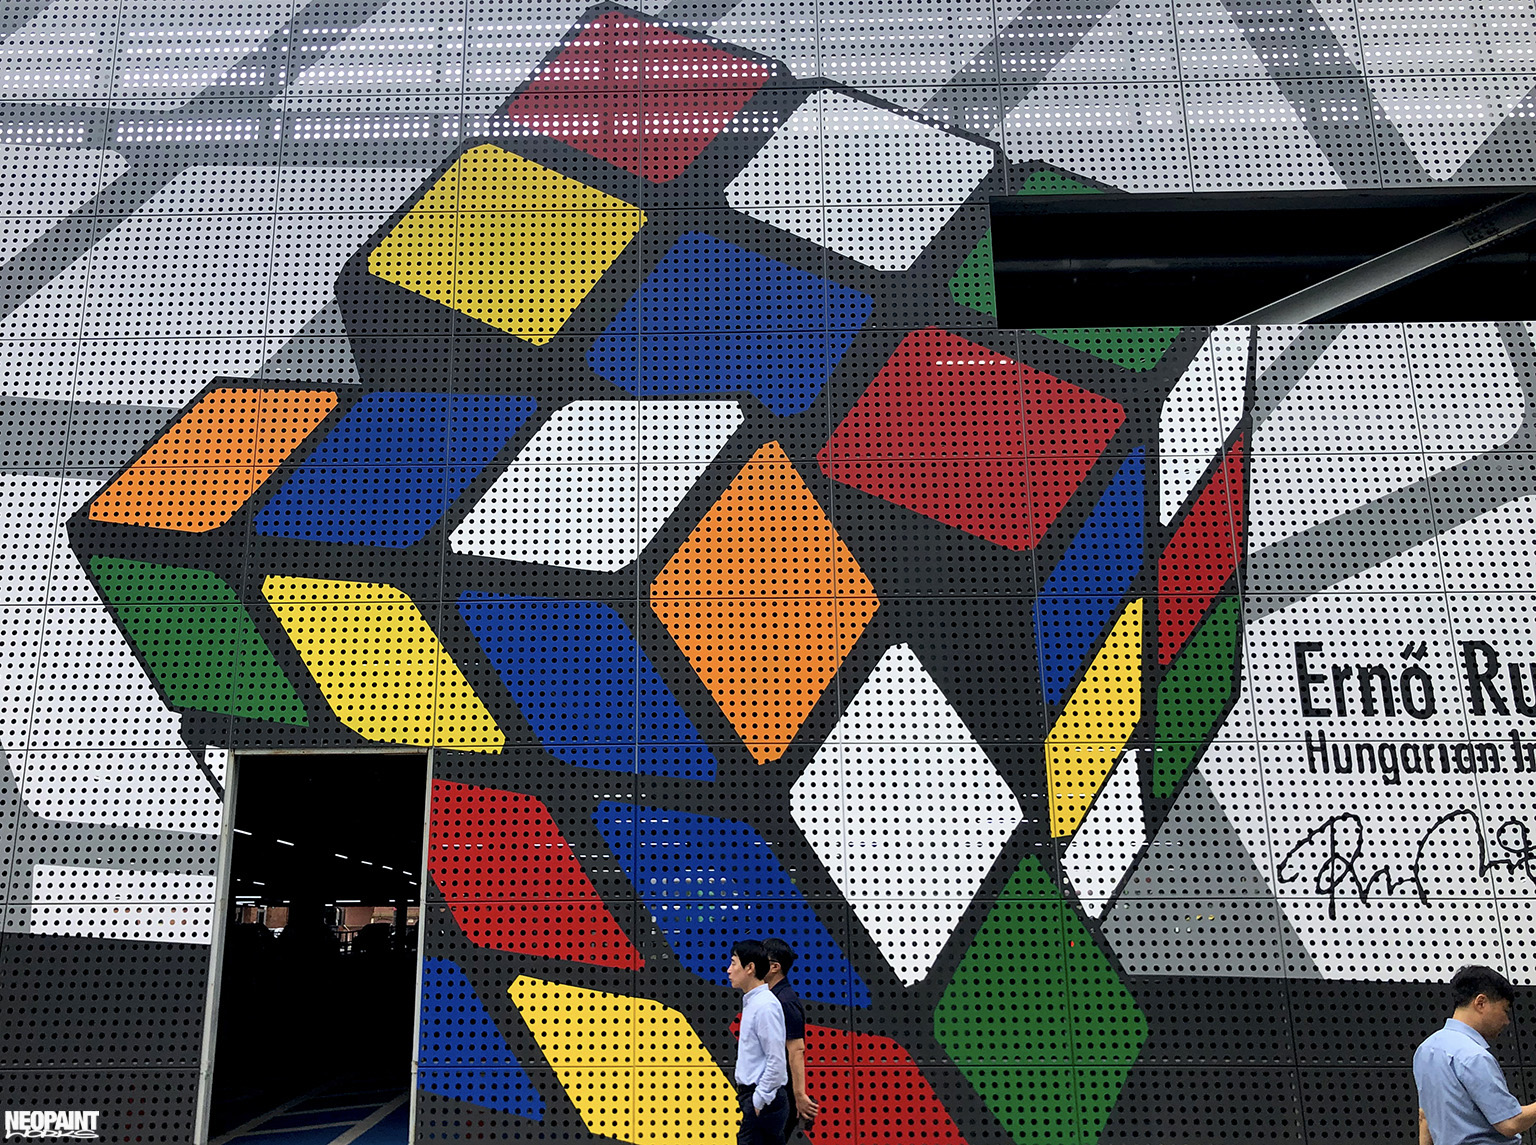 Rubik-kocka festmény - Neopaint Works - Korea (116)